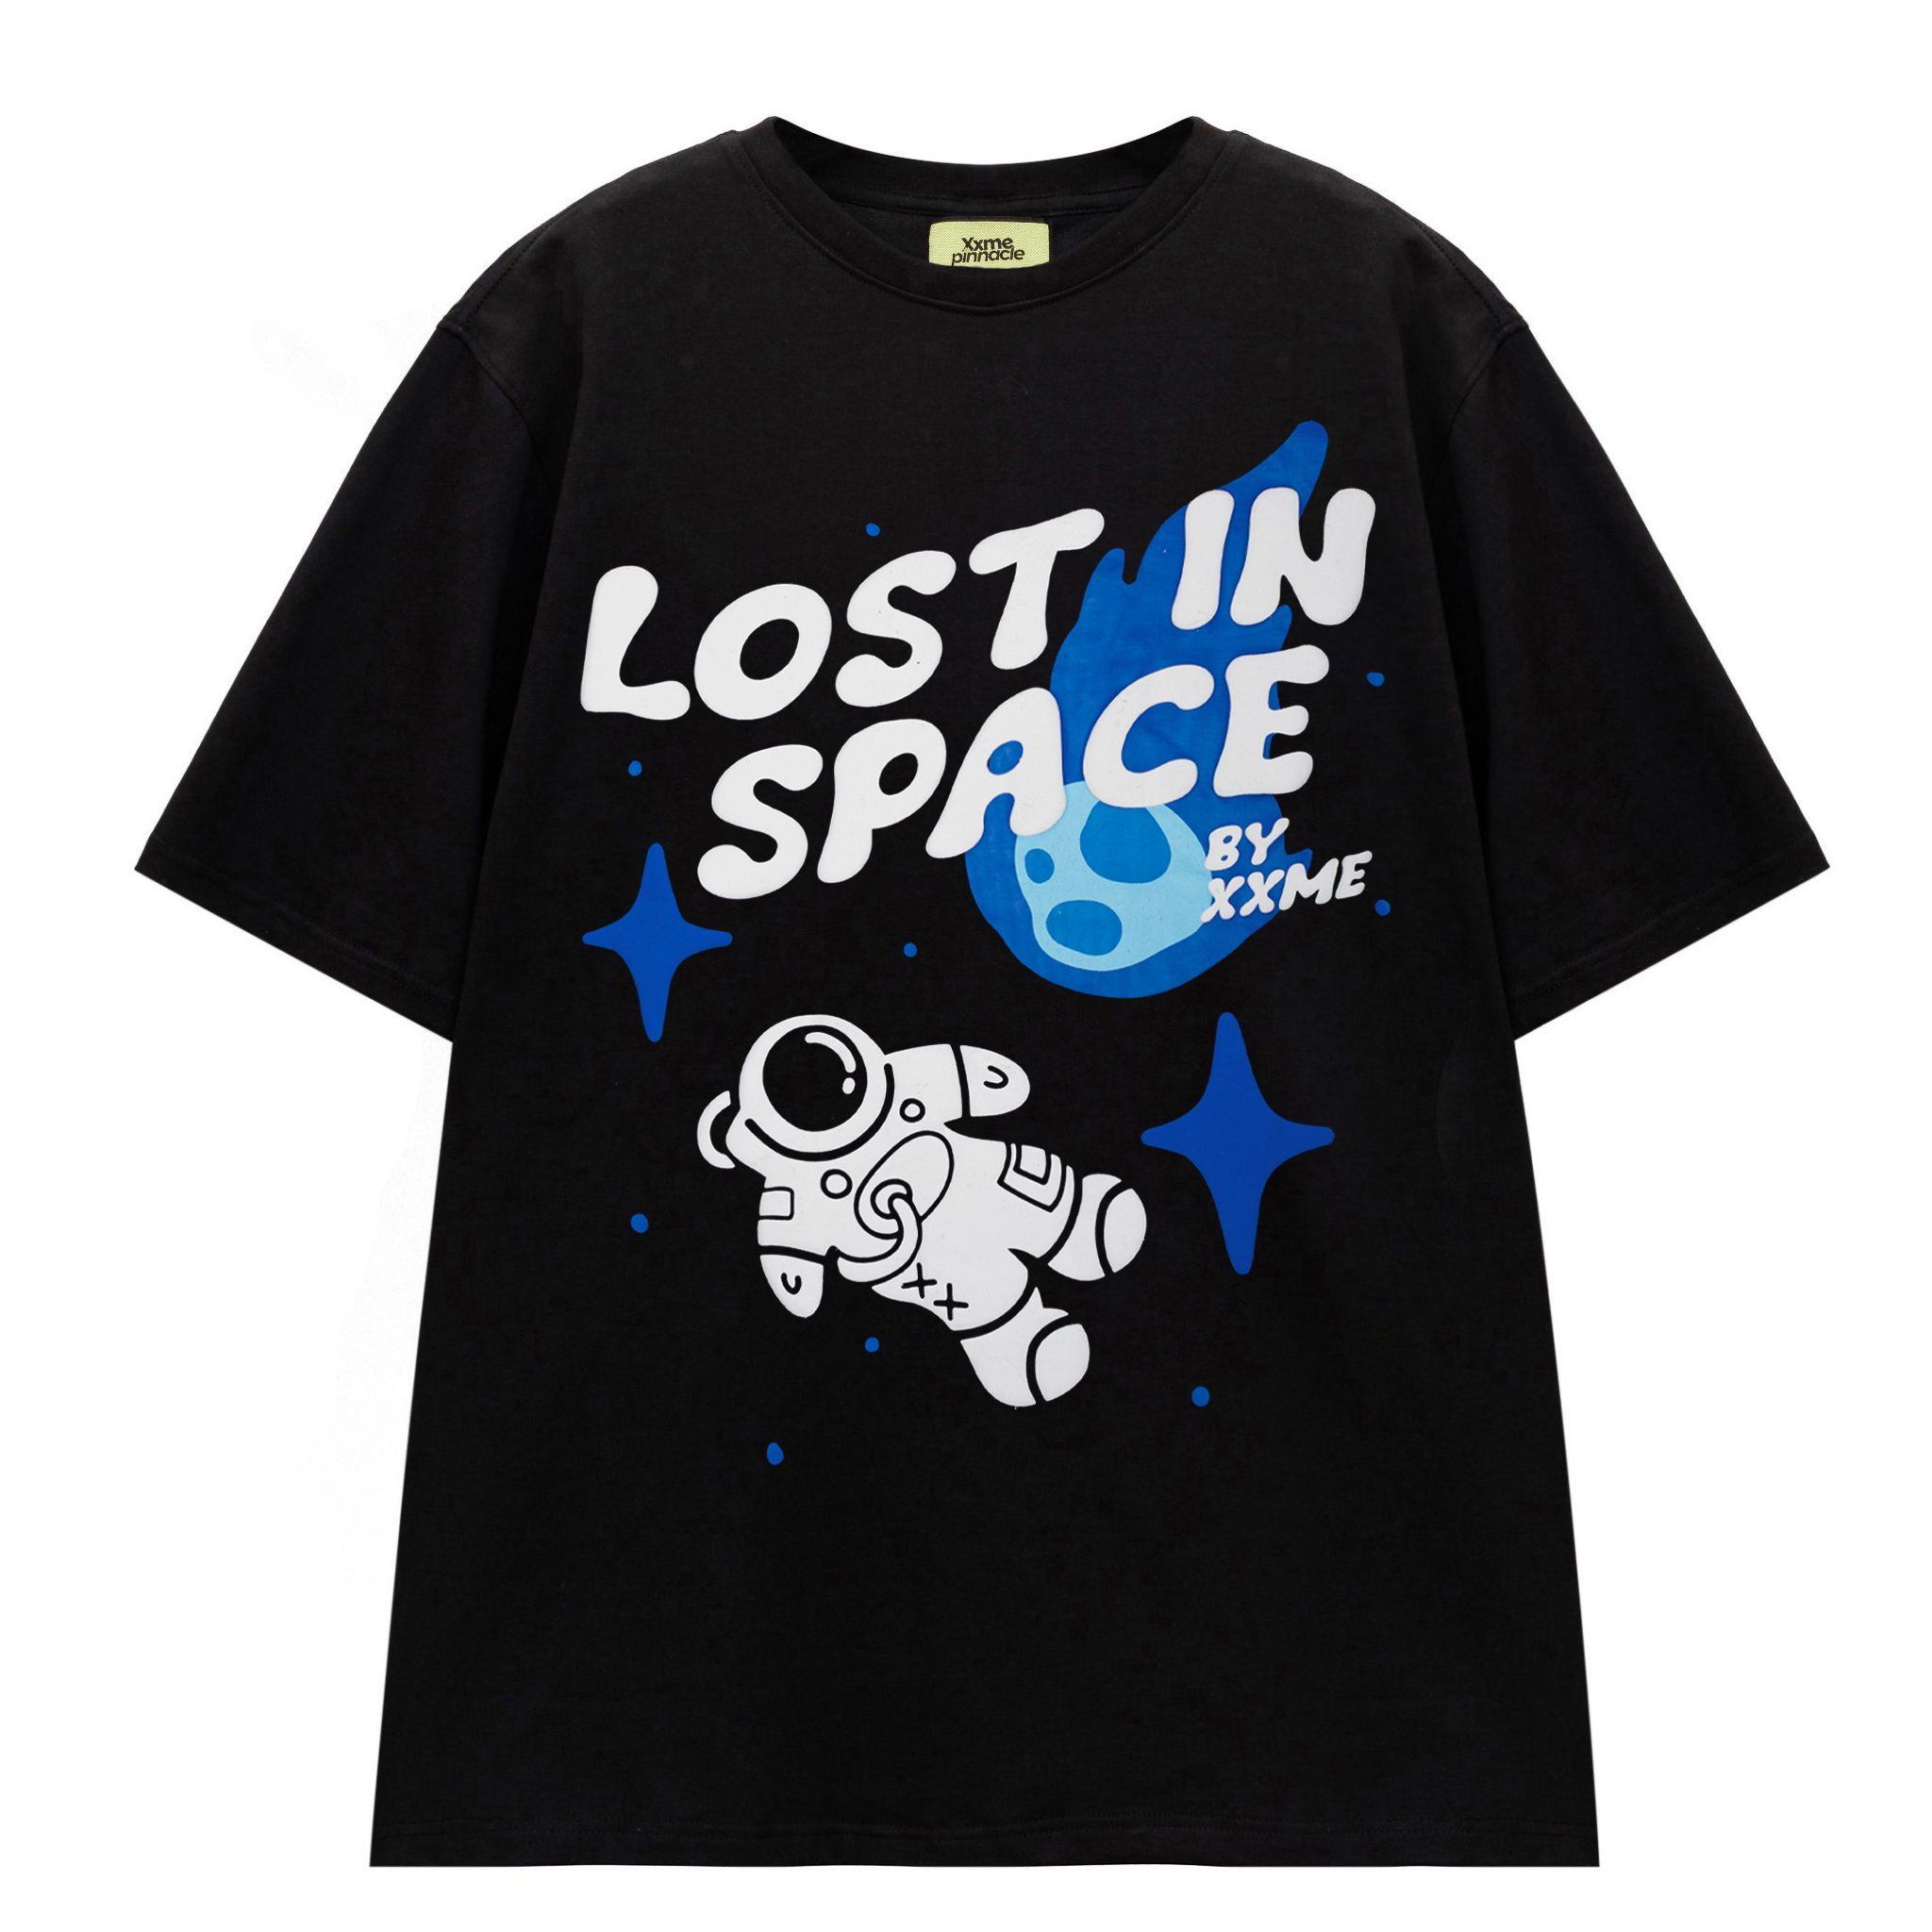  Áo Thun Lost In Space - Black 